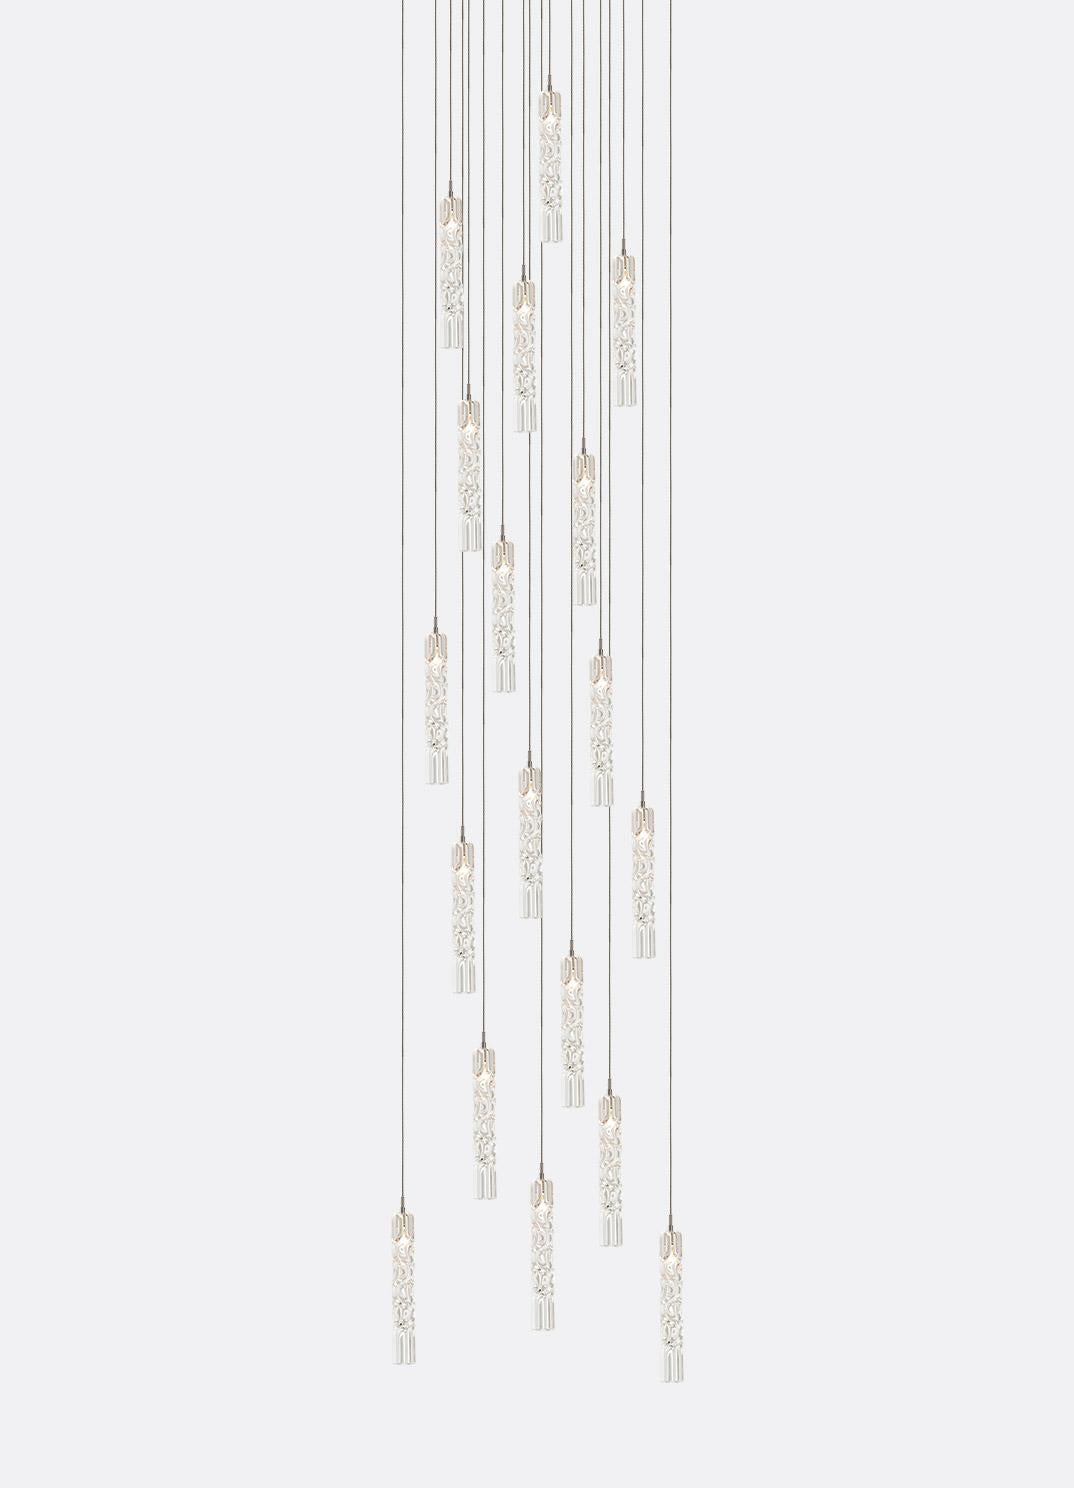 Hand blown glass pendants fixtures. 18 glass pendants on 24